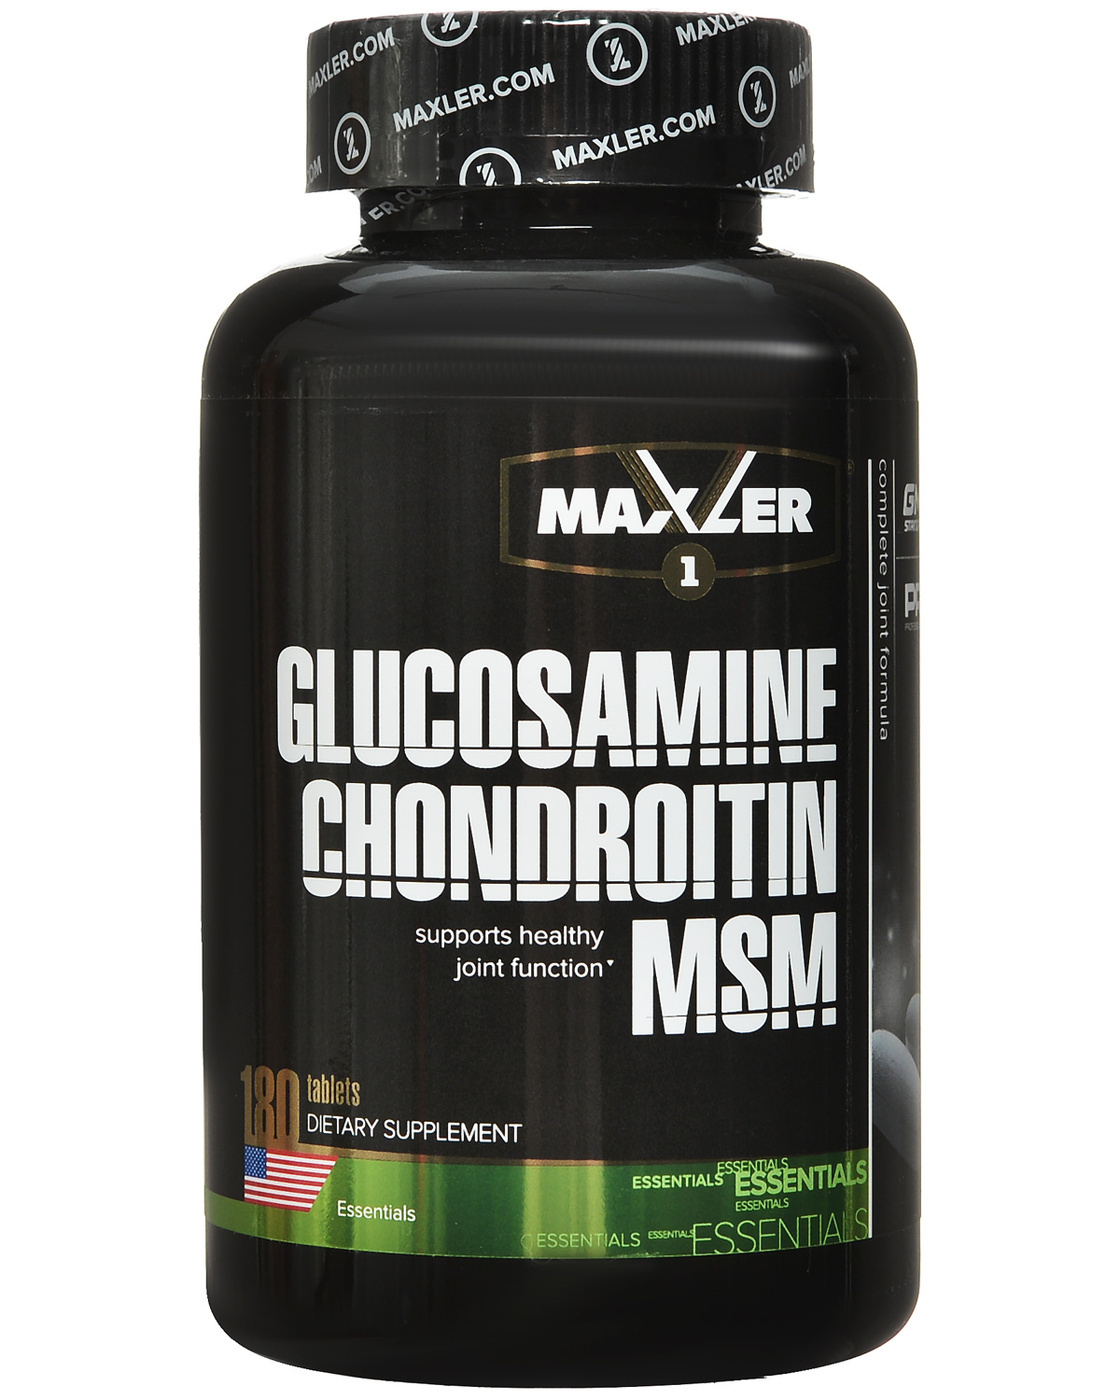 Glucosamine chondroitin msm от maxler